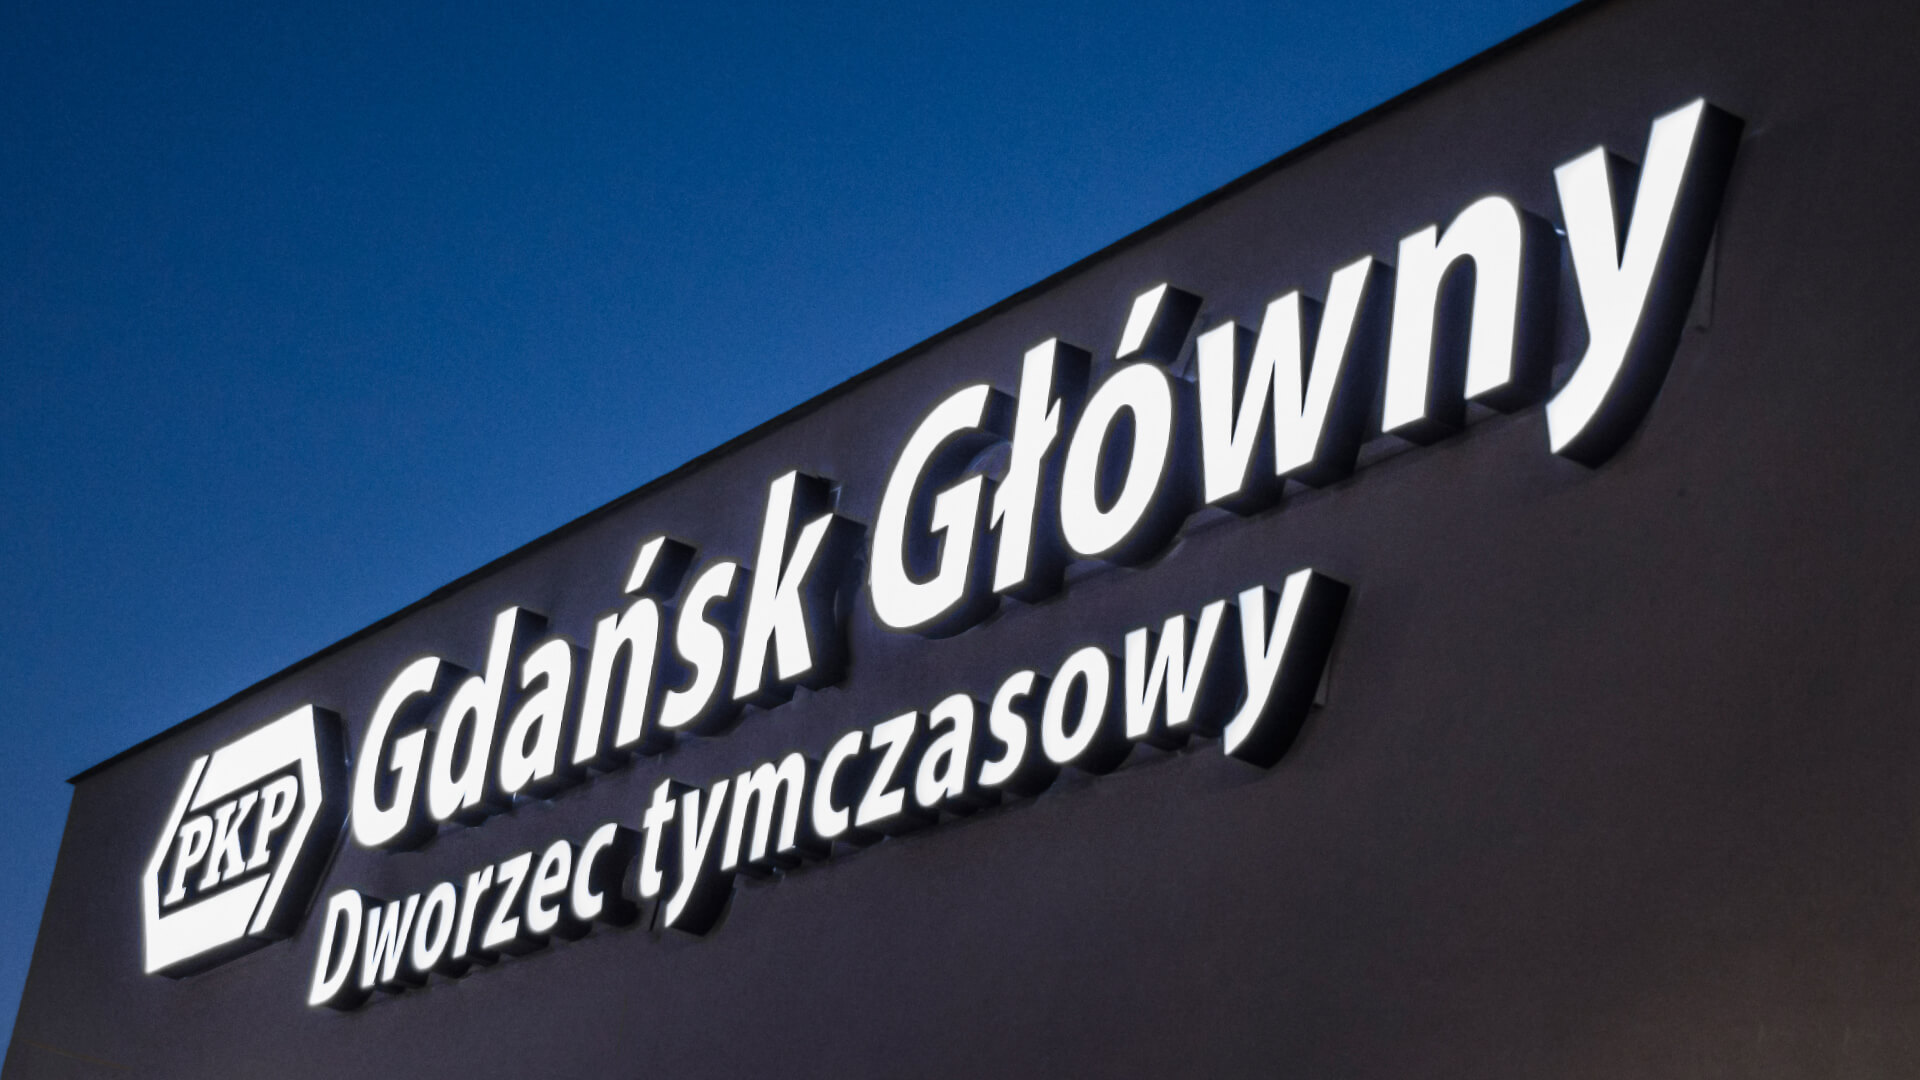 gdańsk Gdansk main algae temporary point station - gdansk-dworzec-timporowy-letters-under-light-led-letters-over-entry-white-letters-spatial-letters-letters-on-the-wall-dworzec-pkp-gdansk-glowny